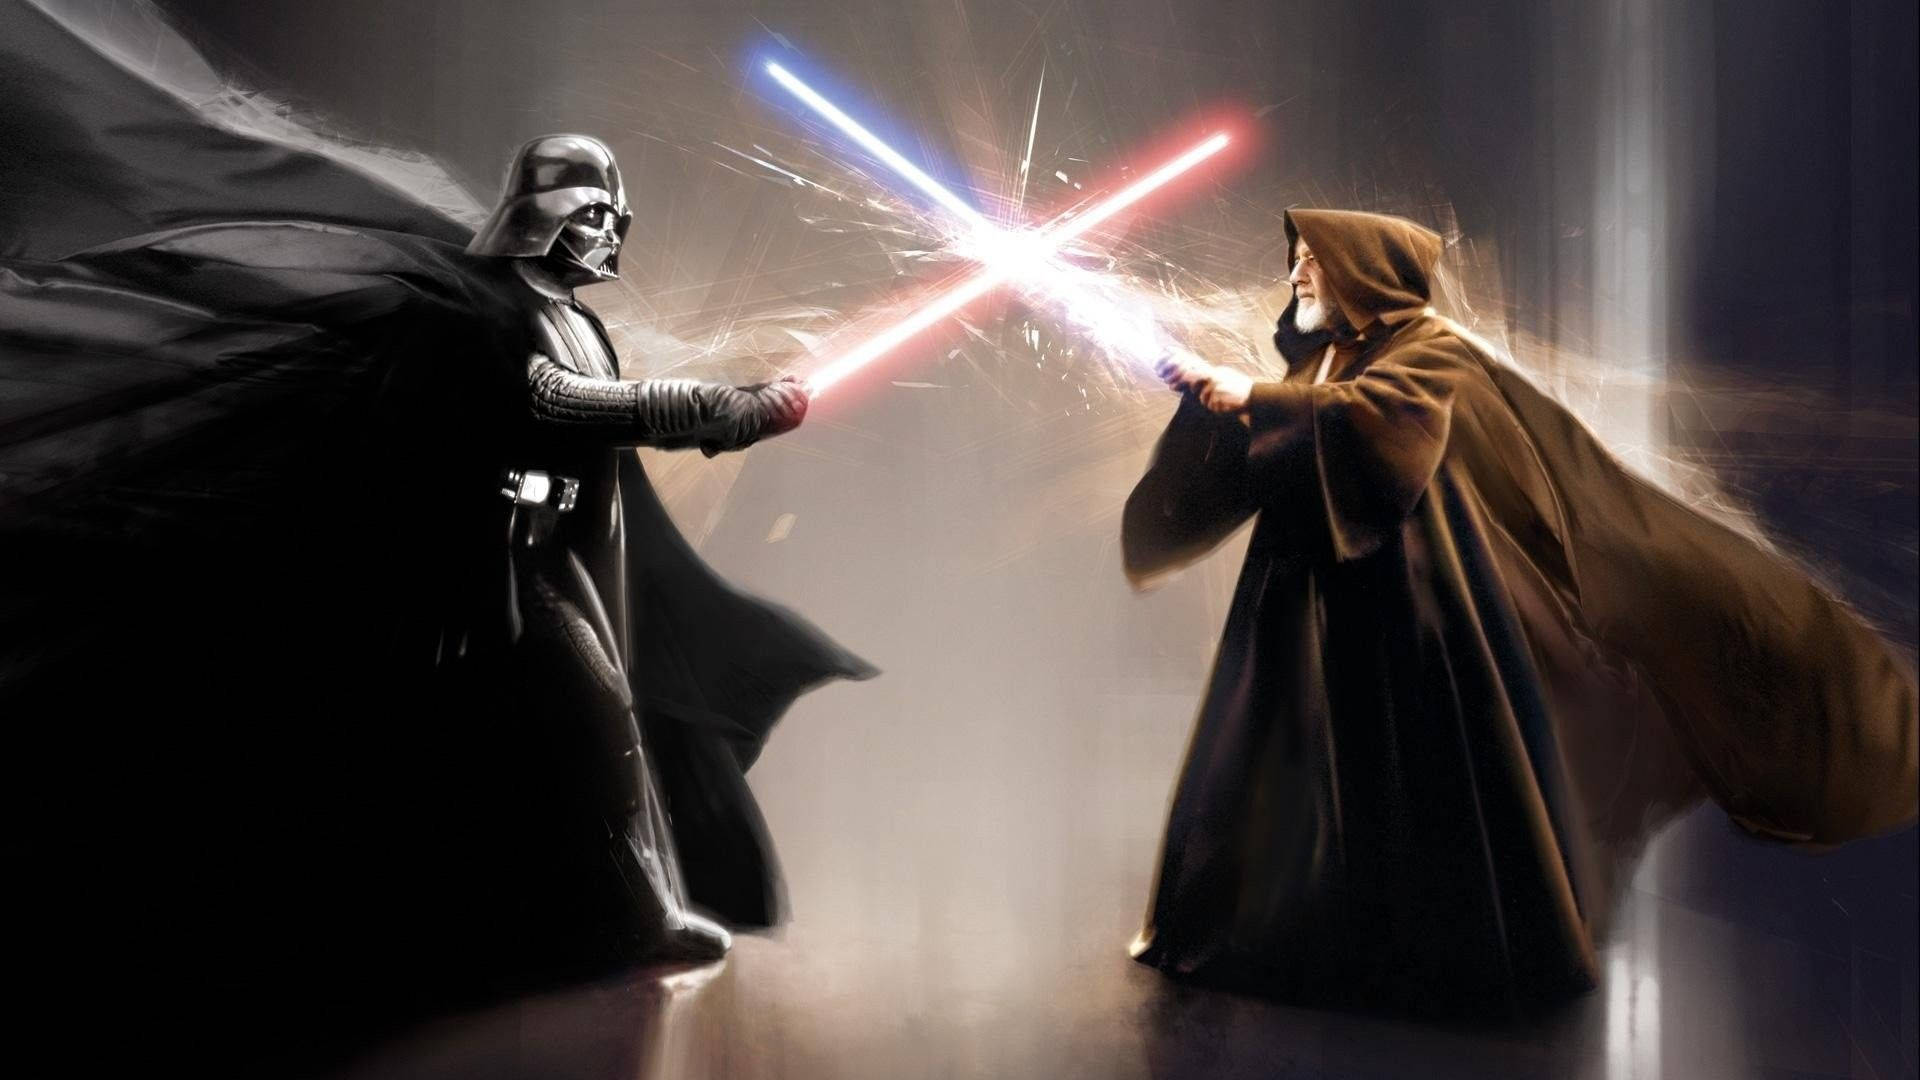 Lightsaber Battle Tales Of The Jedi Wallpaper